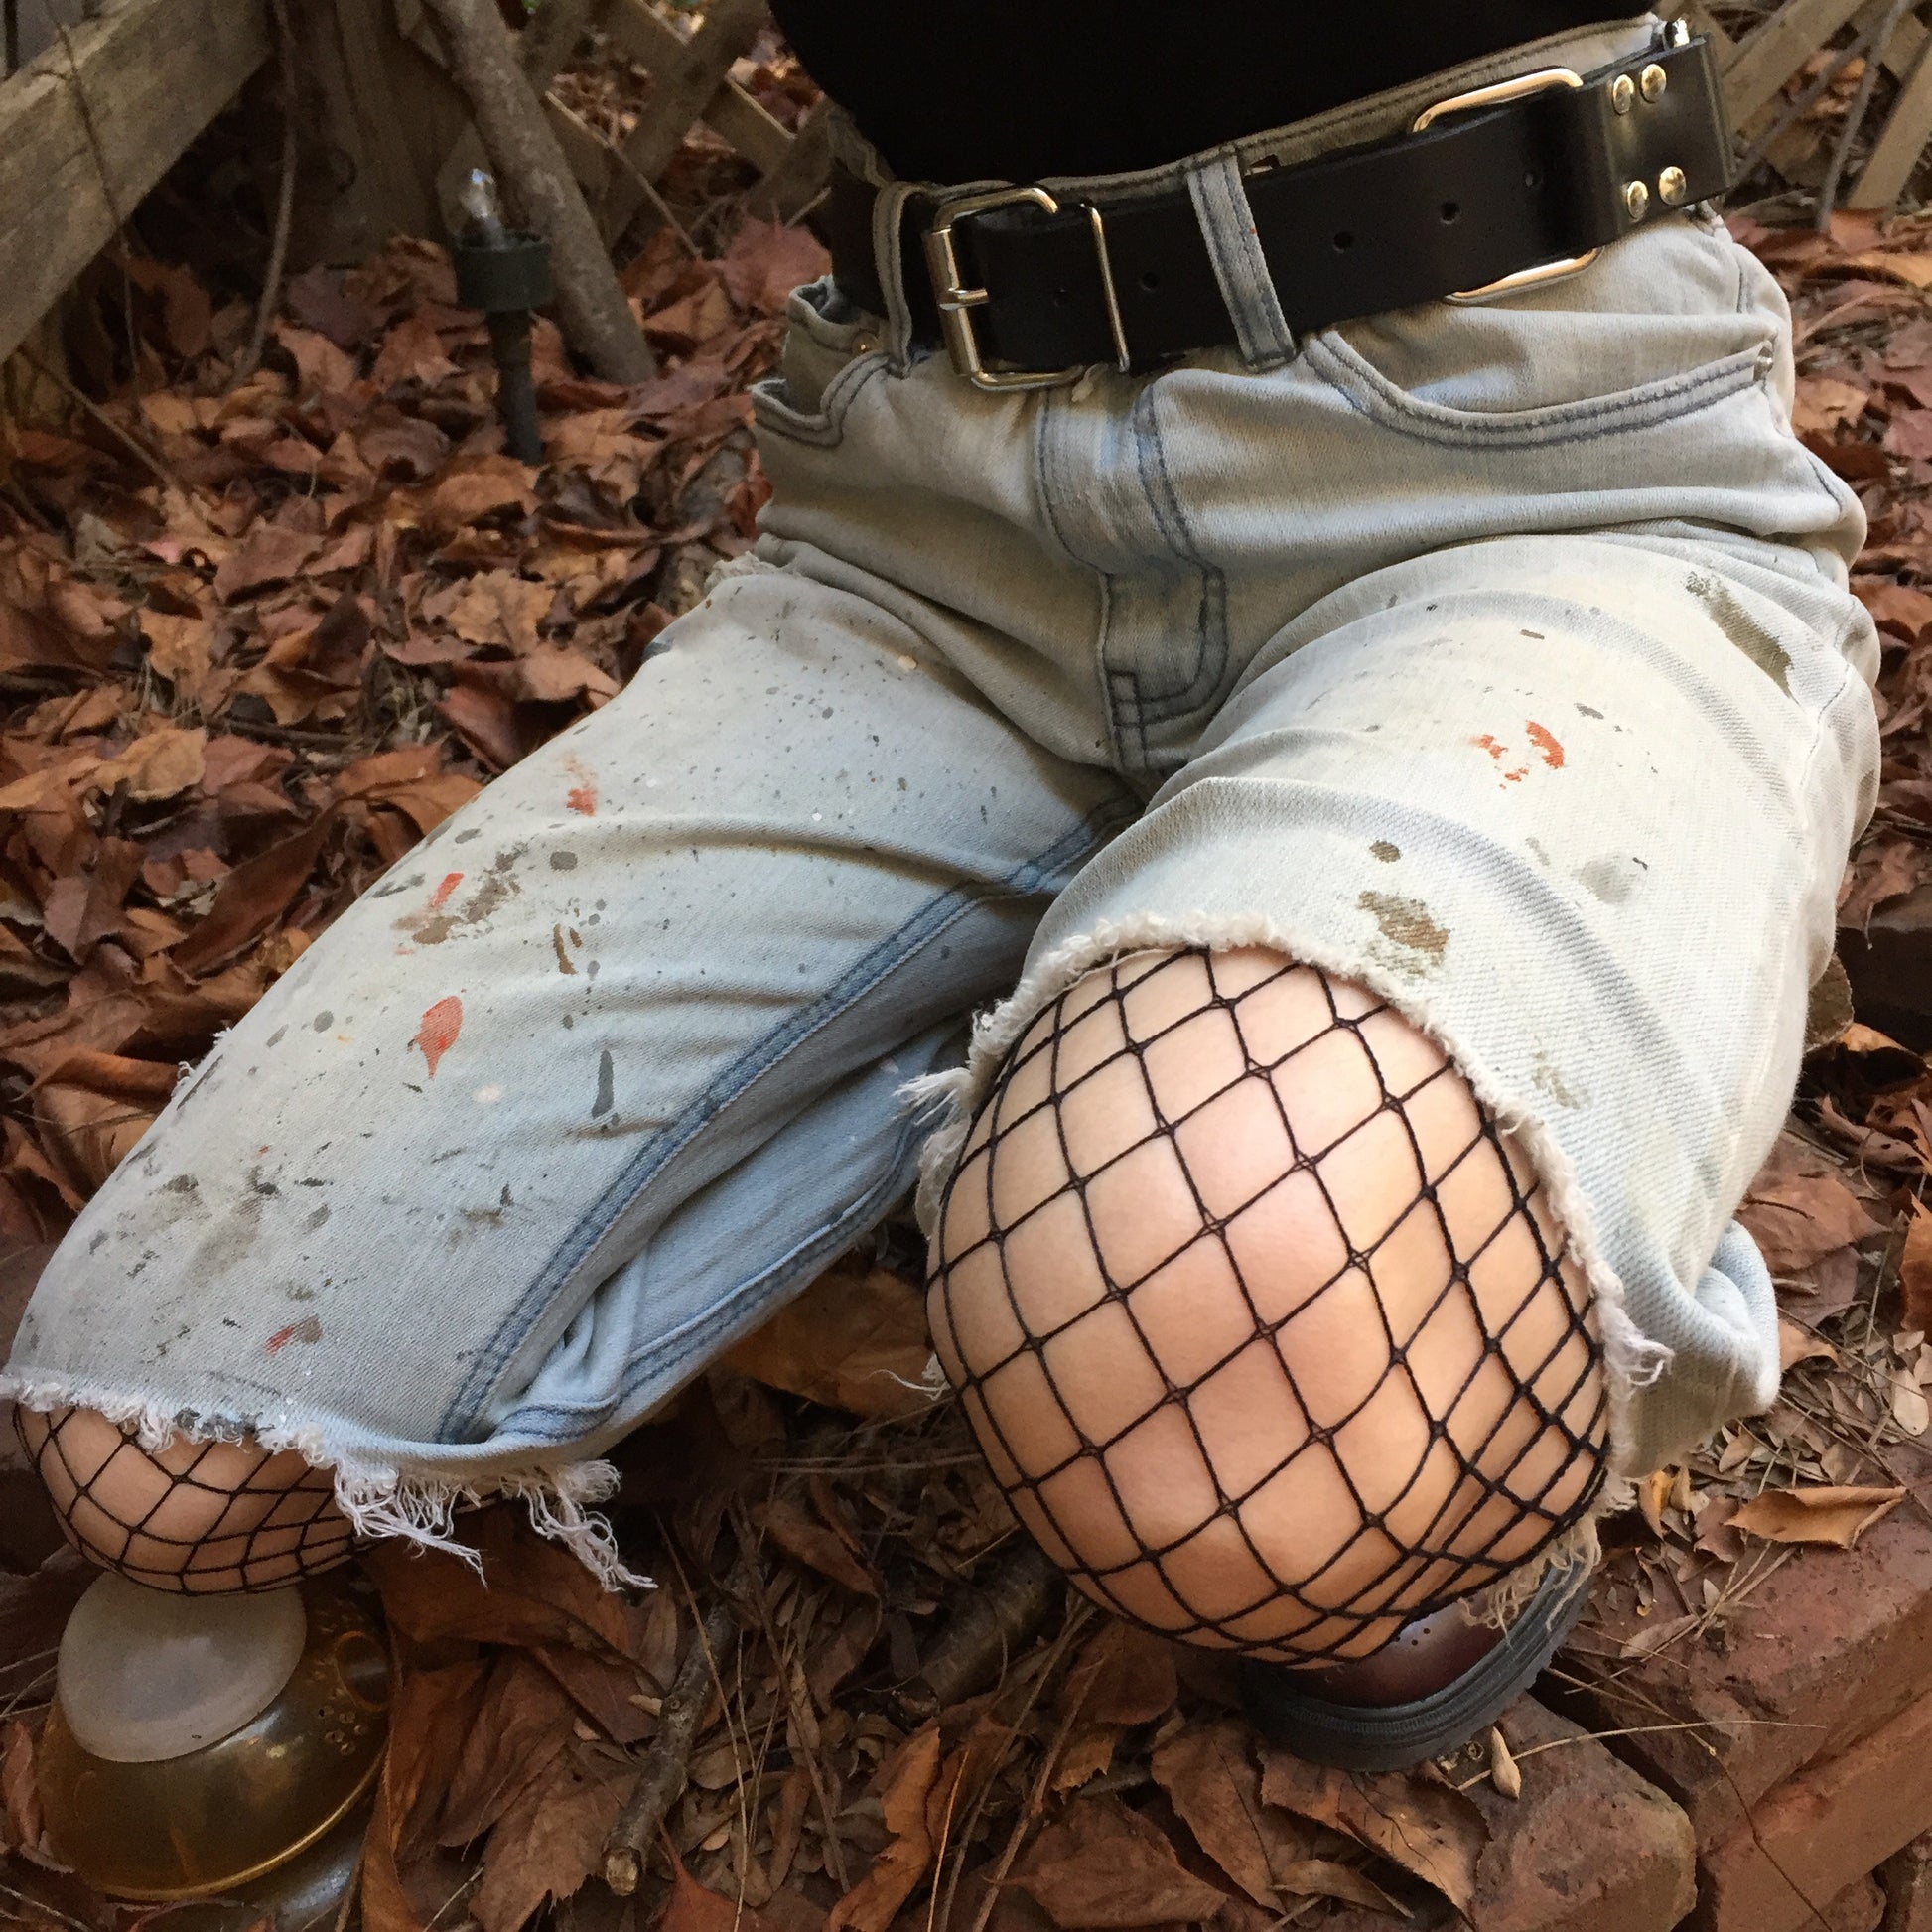 Spandex Industrial Net Pantyhose in black, closeup of knee under jean shorts.